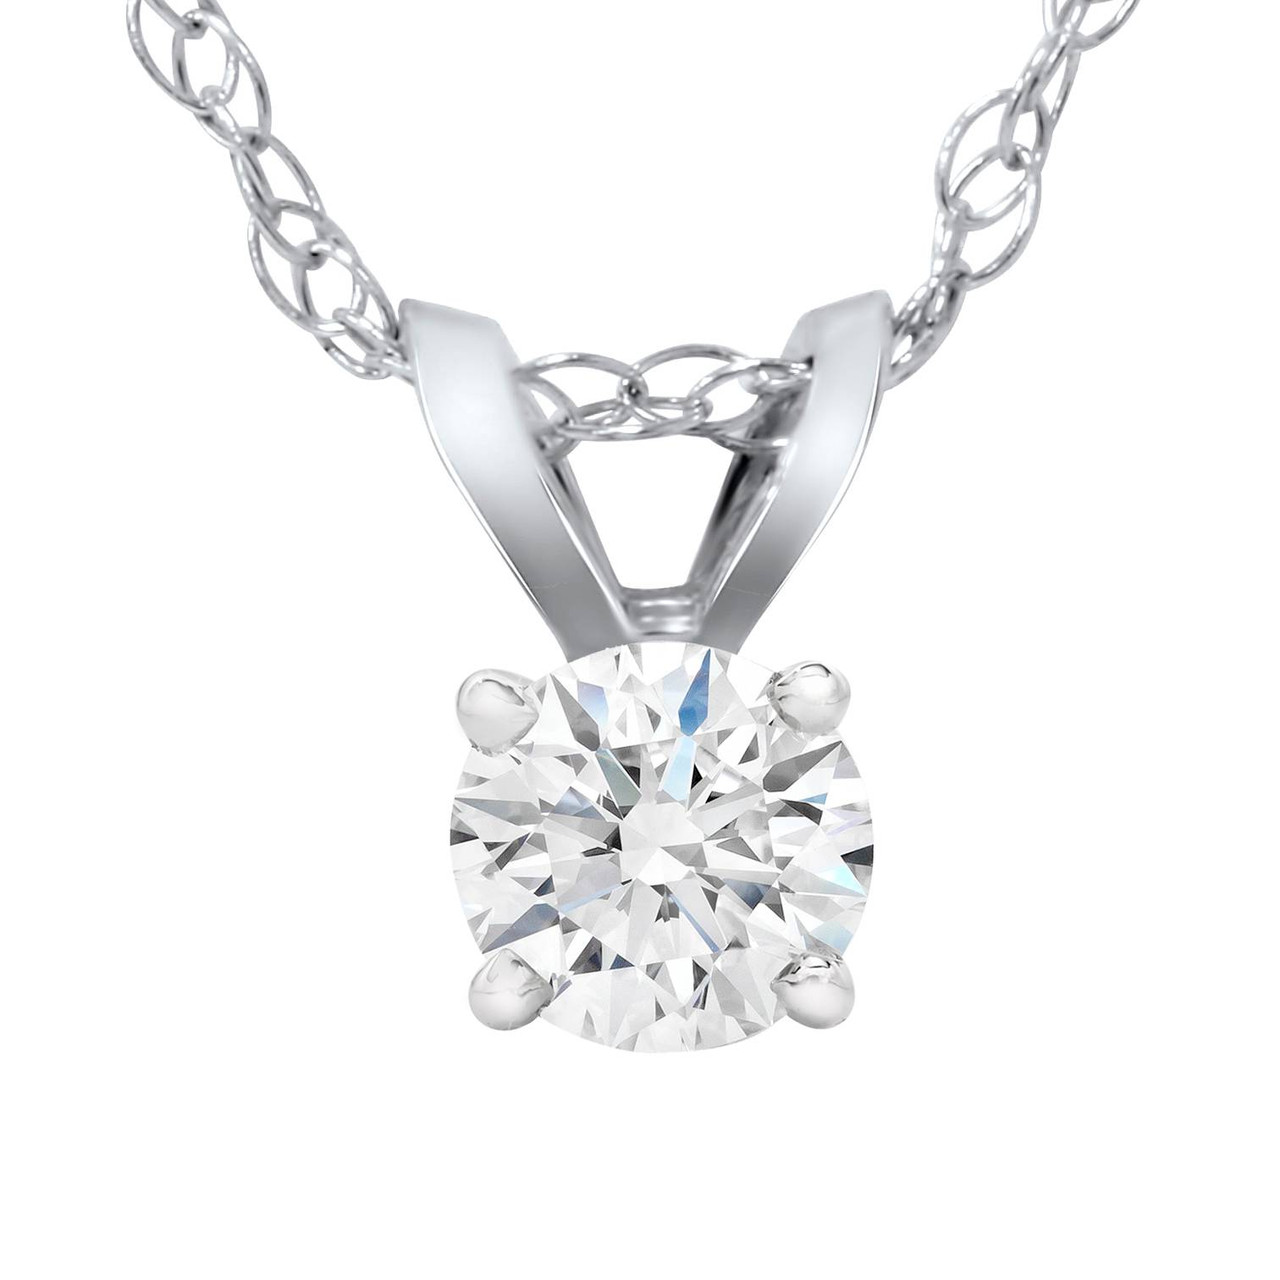 Estate 4.86 Carat Colombian Emerald and Diamond Pendant Necklace - GIA